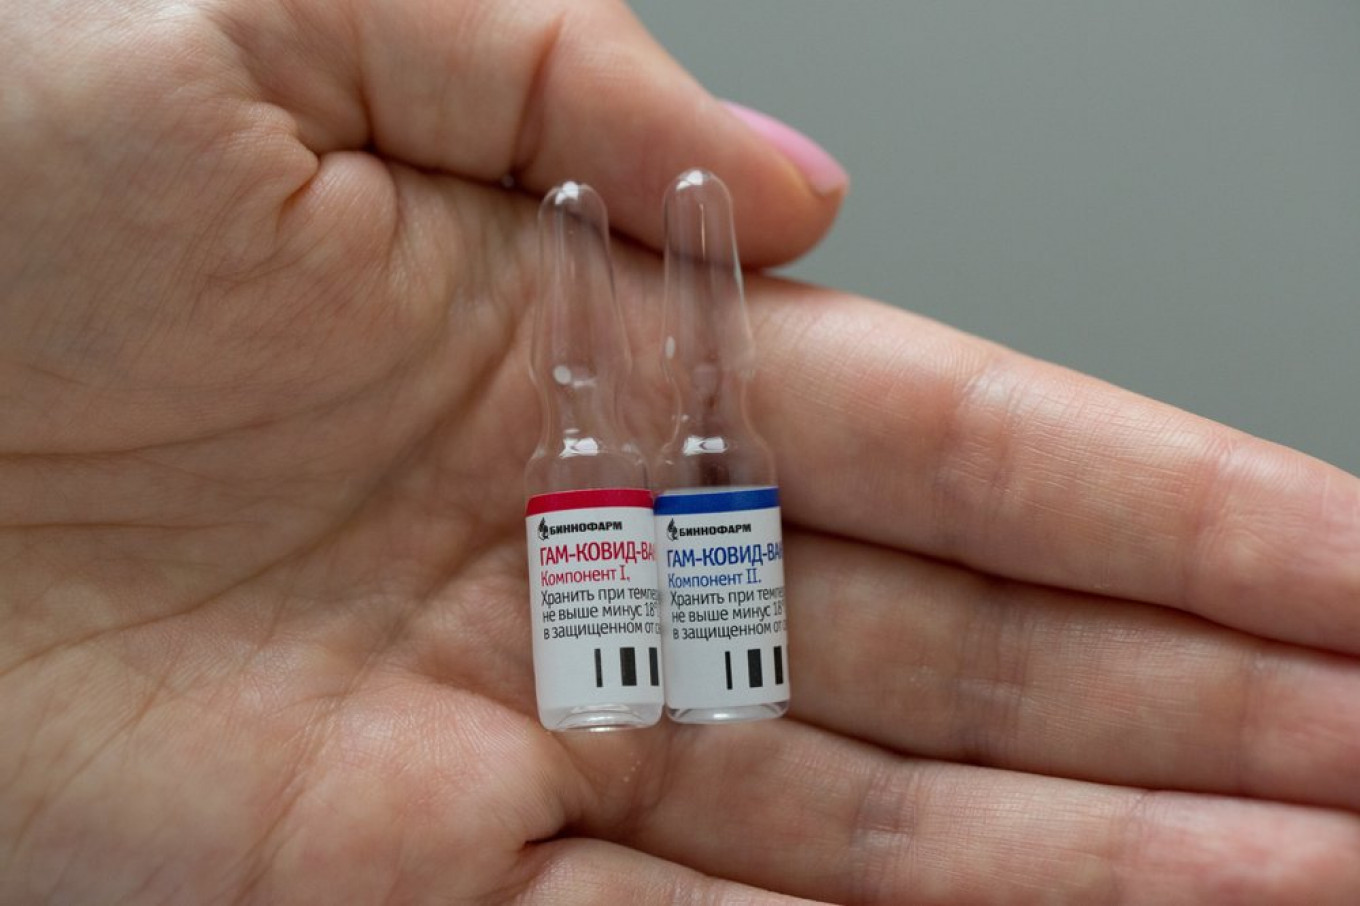 Russia to Start Mass Deliveries of Coronavirus Vaccine Next Month